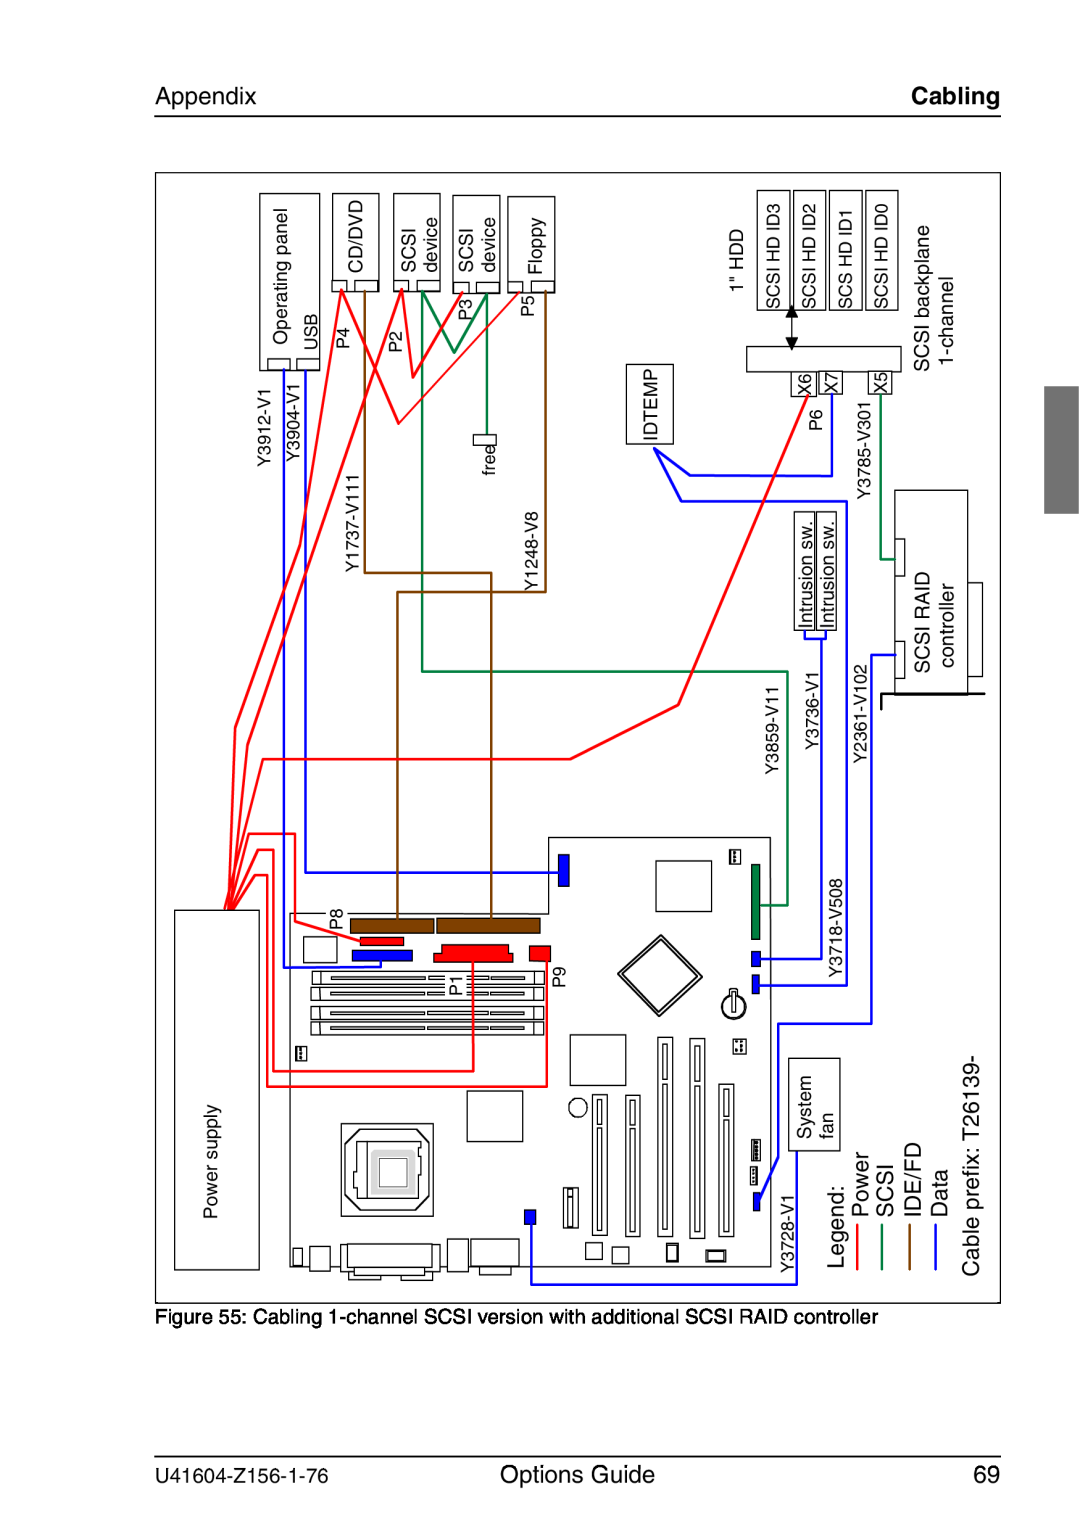 Fujitsu TX150 S3 Cabling, Power, Scsi, Ide/Fd, Data, Cable prefix T26139, U41604-Z156-1-76, additional SCSI, Raid, channel 